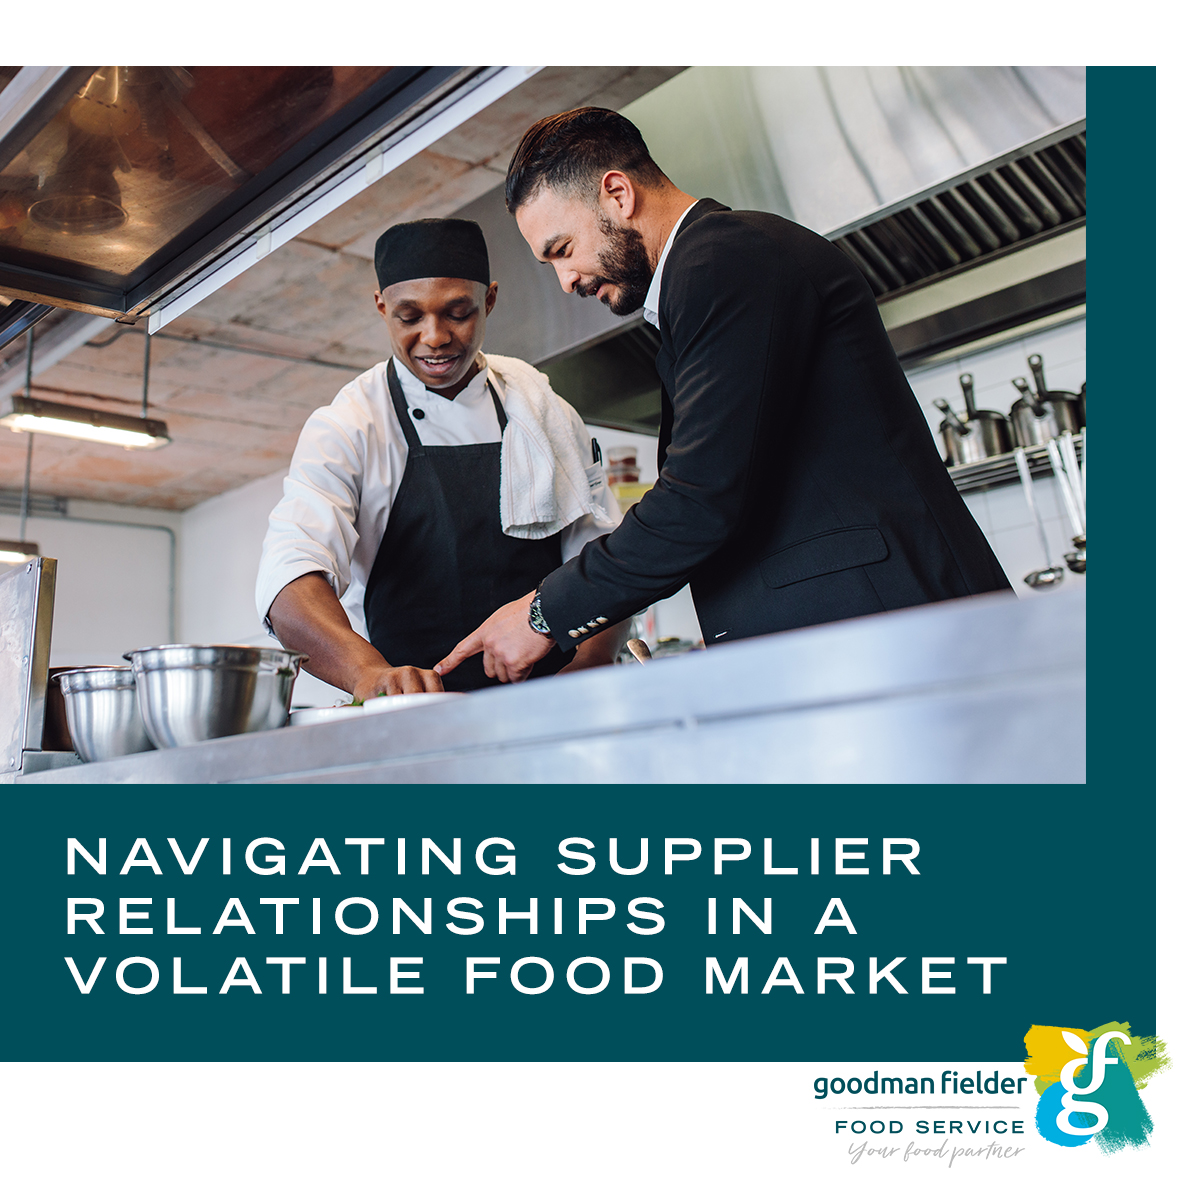 Navigating supplier relationships in a volatile foodservice market.